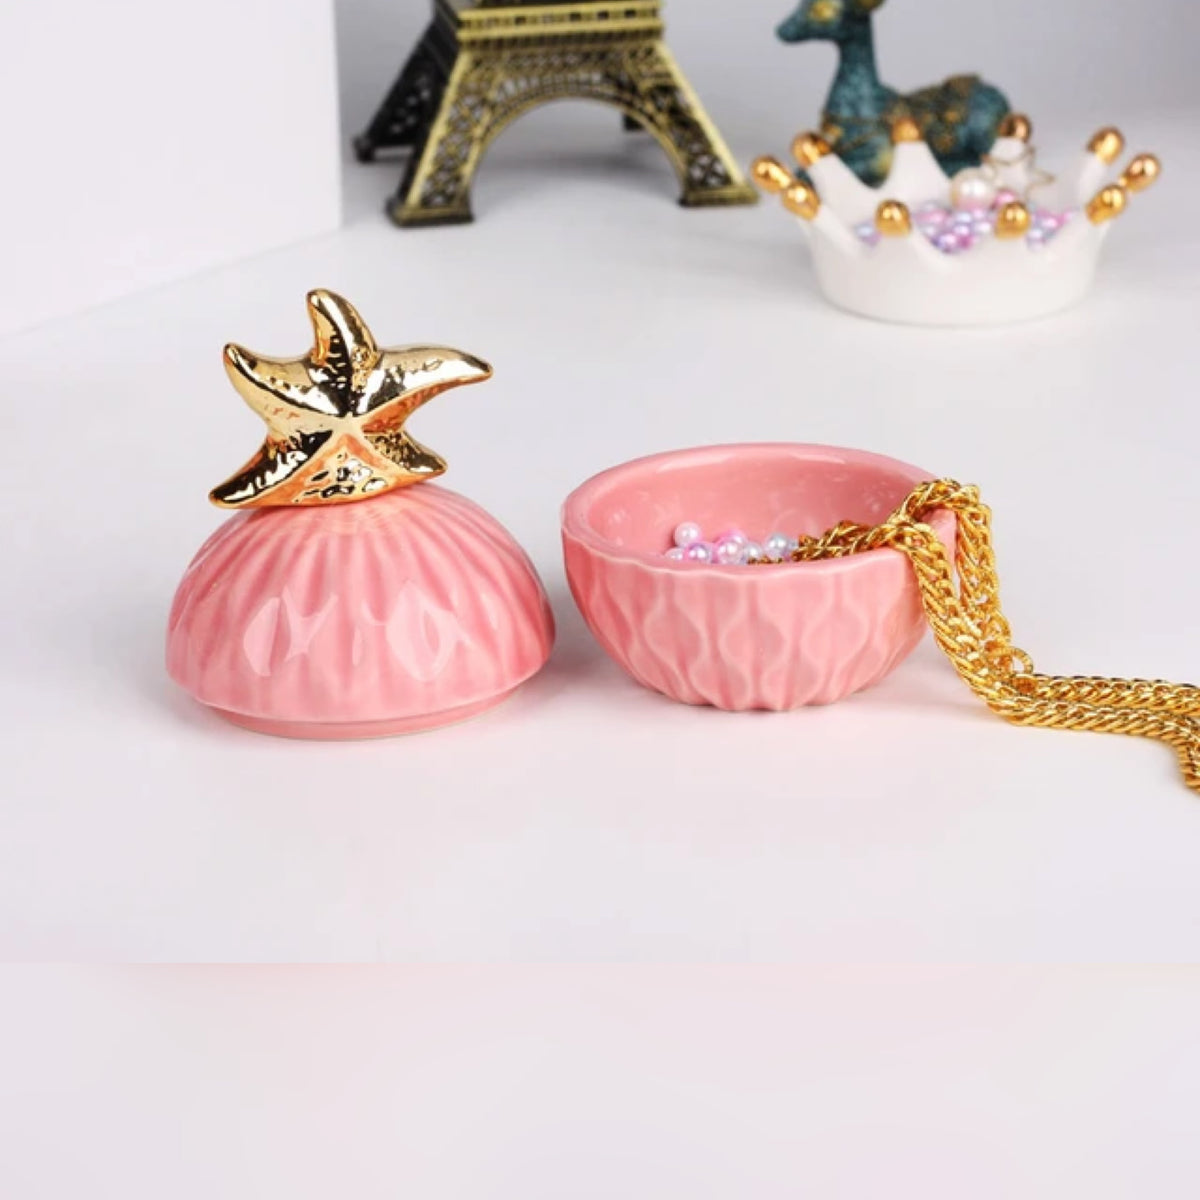 Starfish Jewellery Candy Gift Box